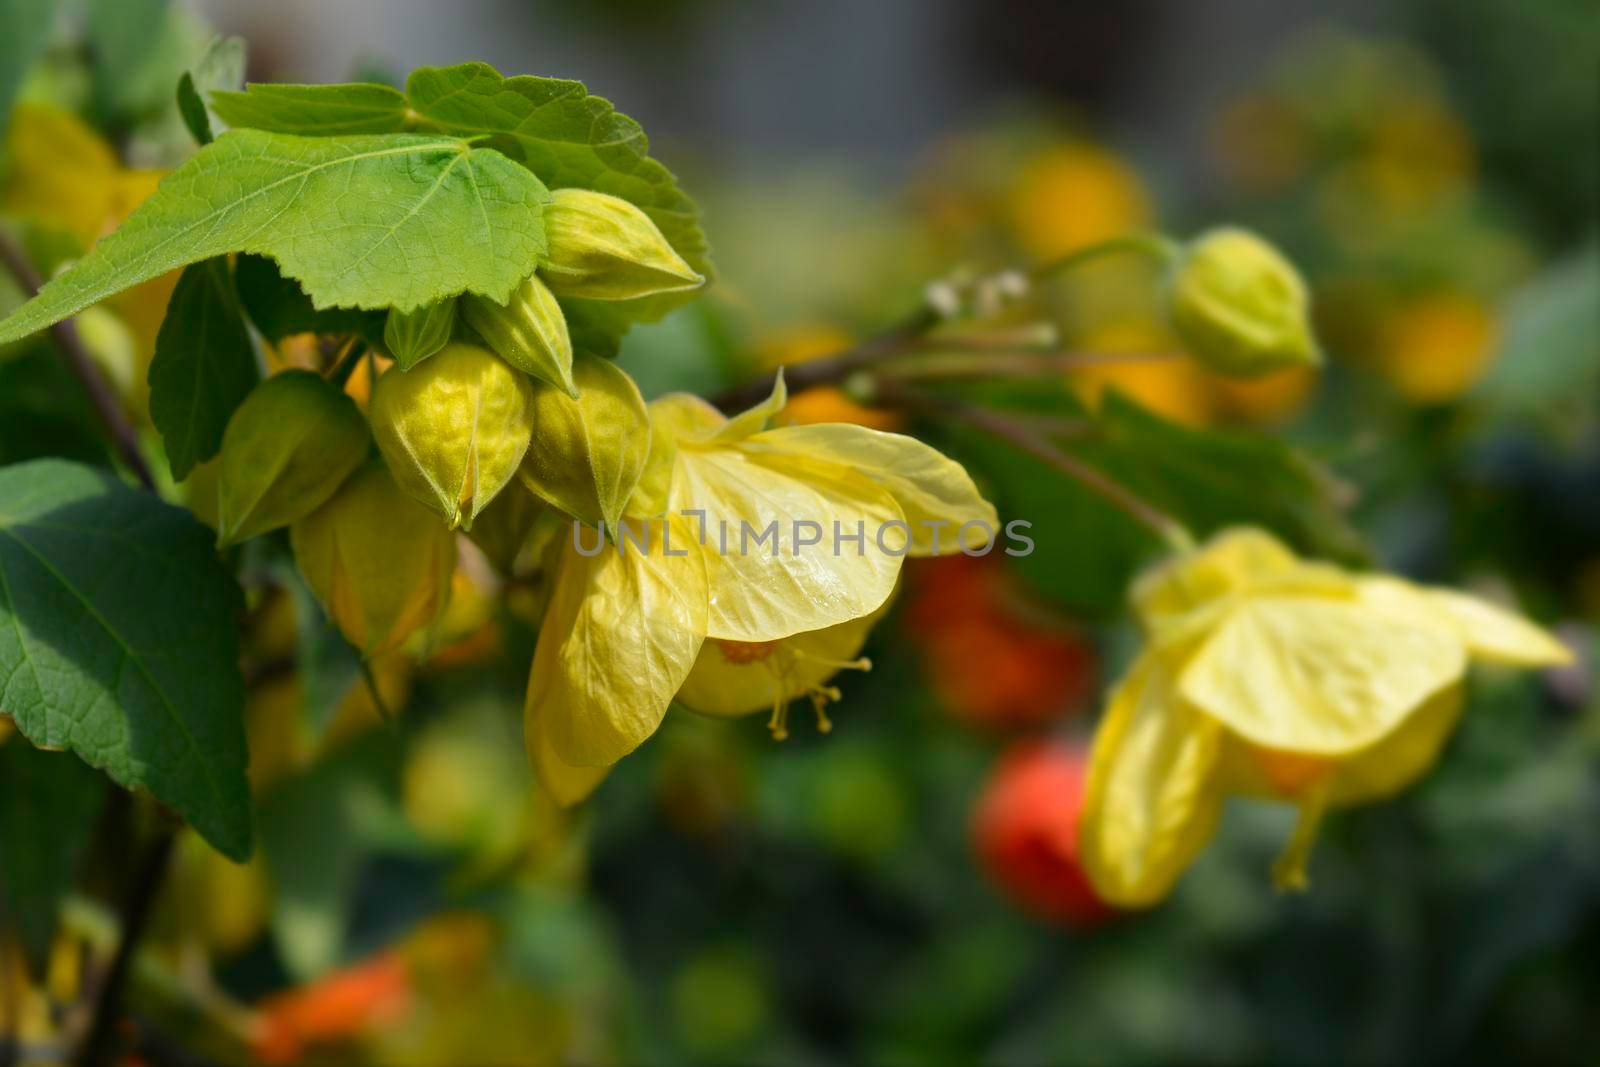 Chinese lantern yellow flower buds - Latin name - Abutilon hybrids